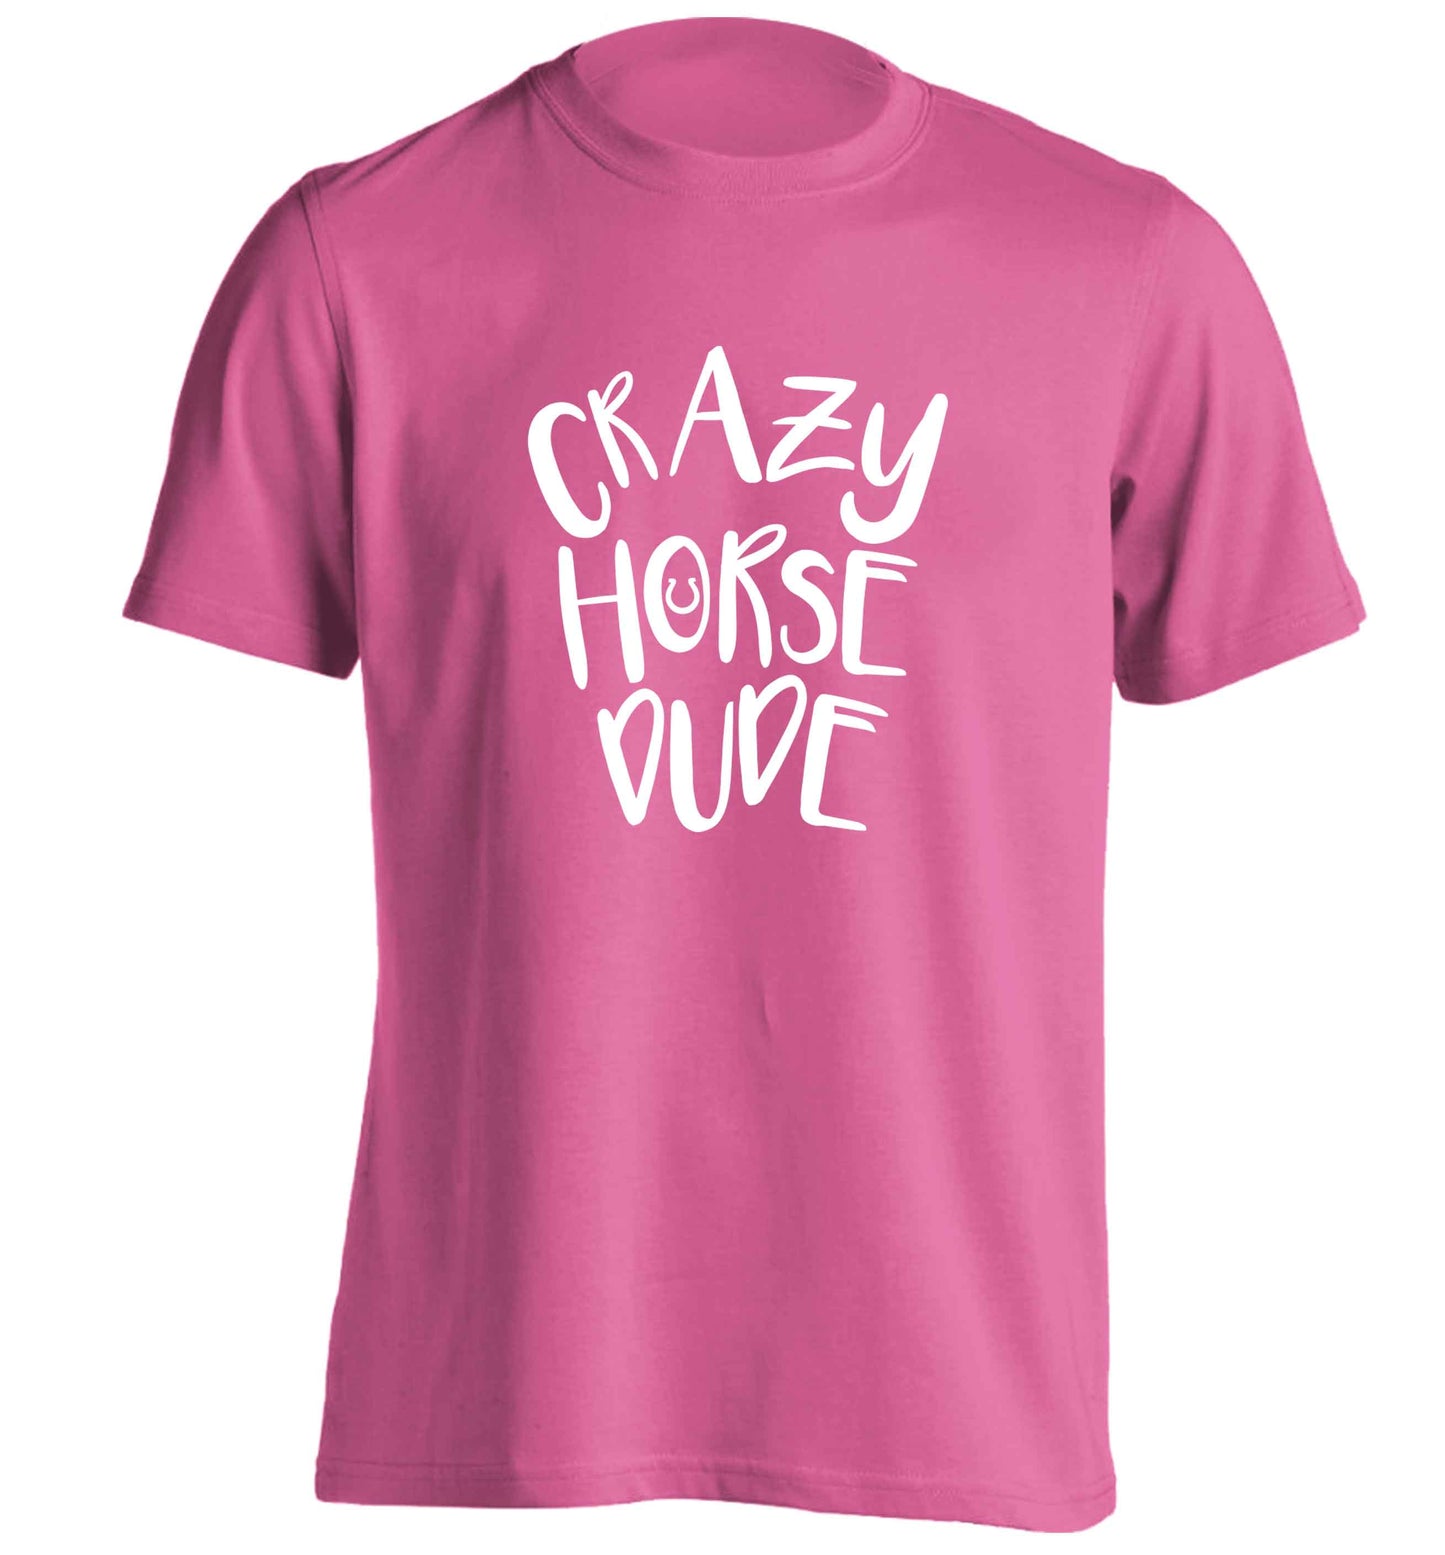 Crazy horse dude adults unisex pink Tshirt 2XL